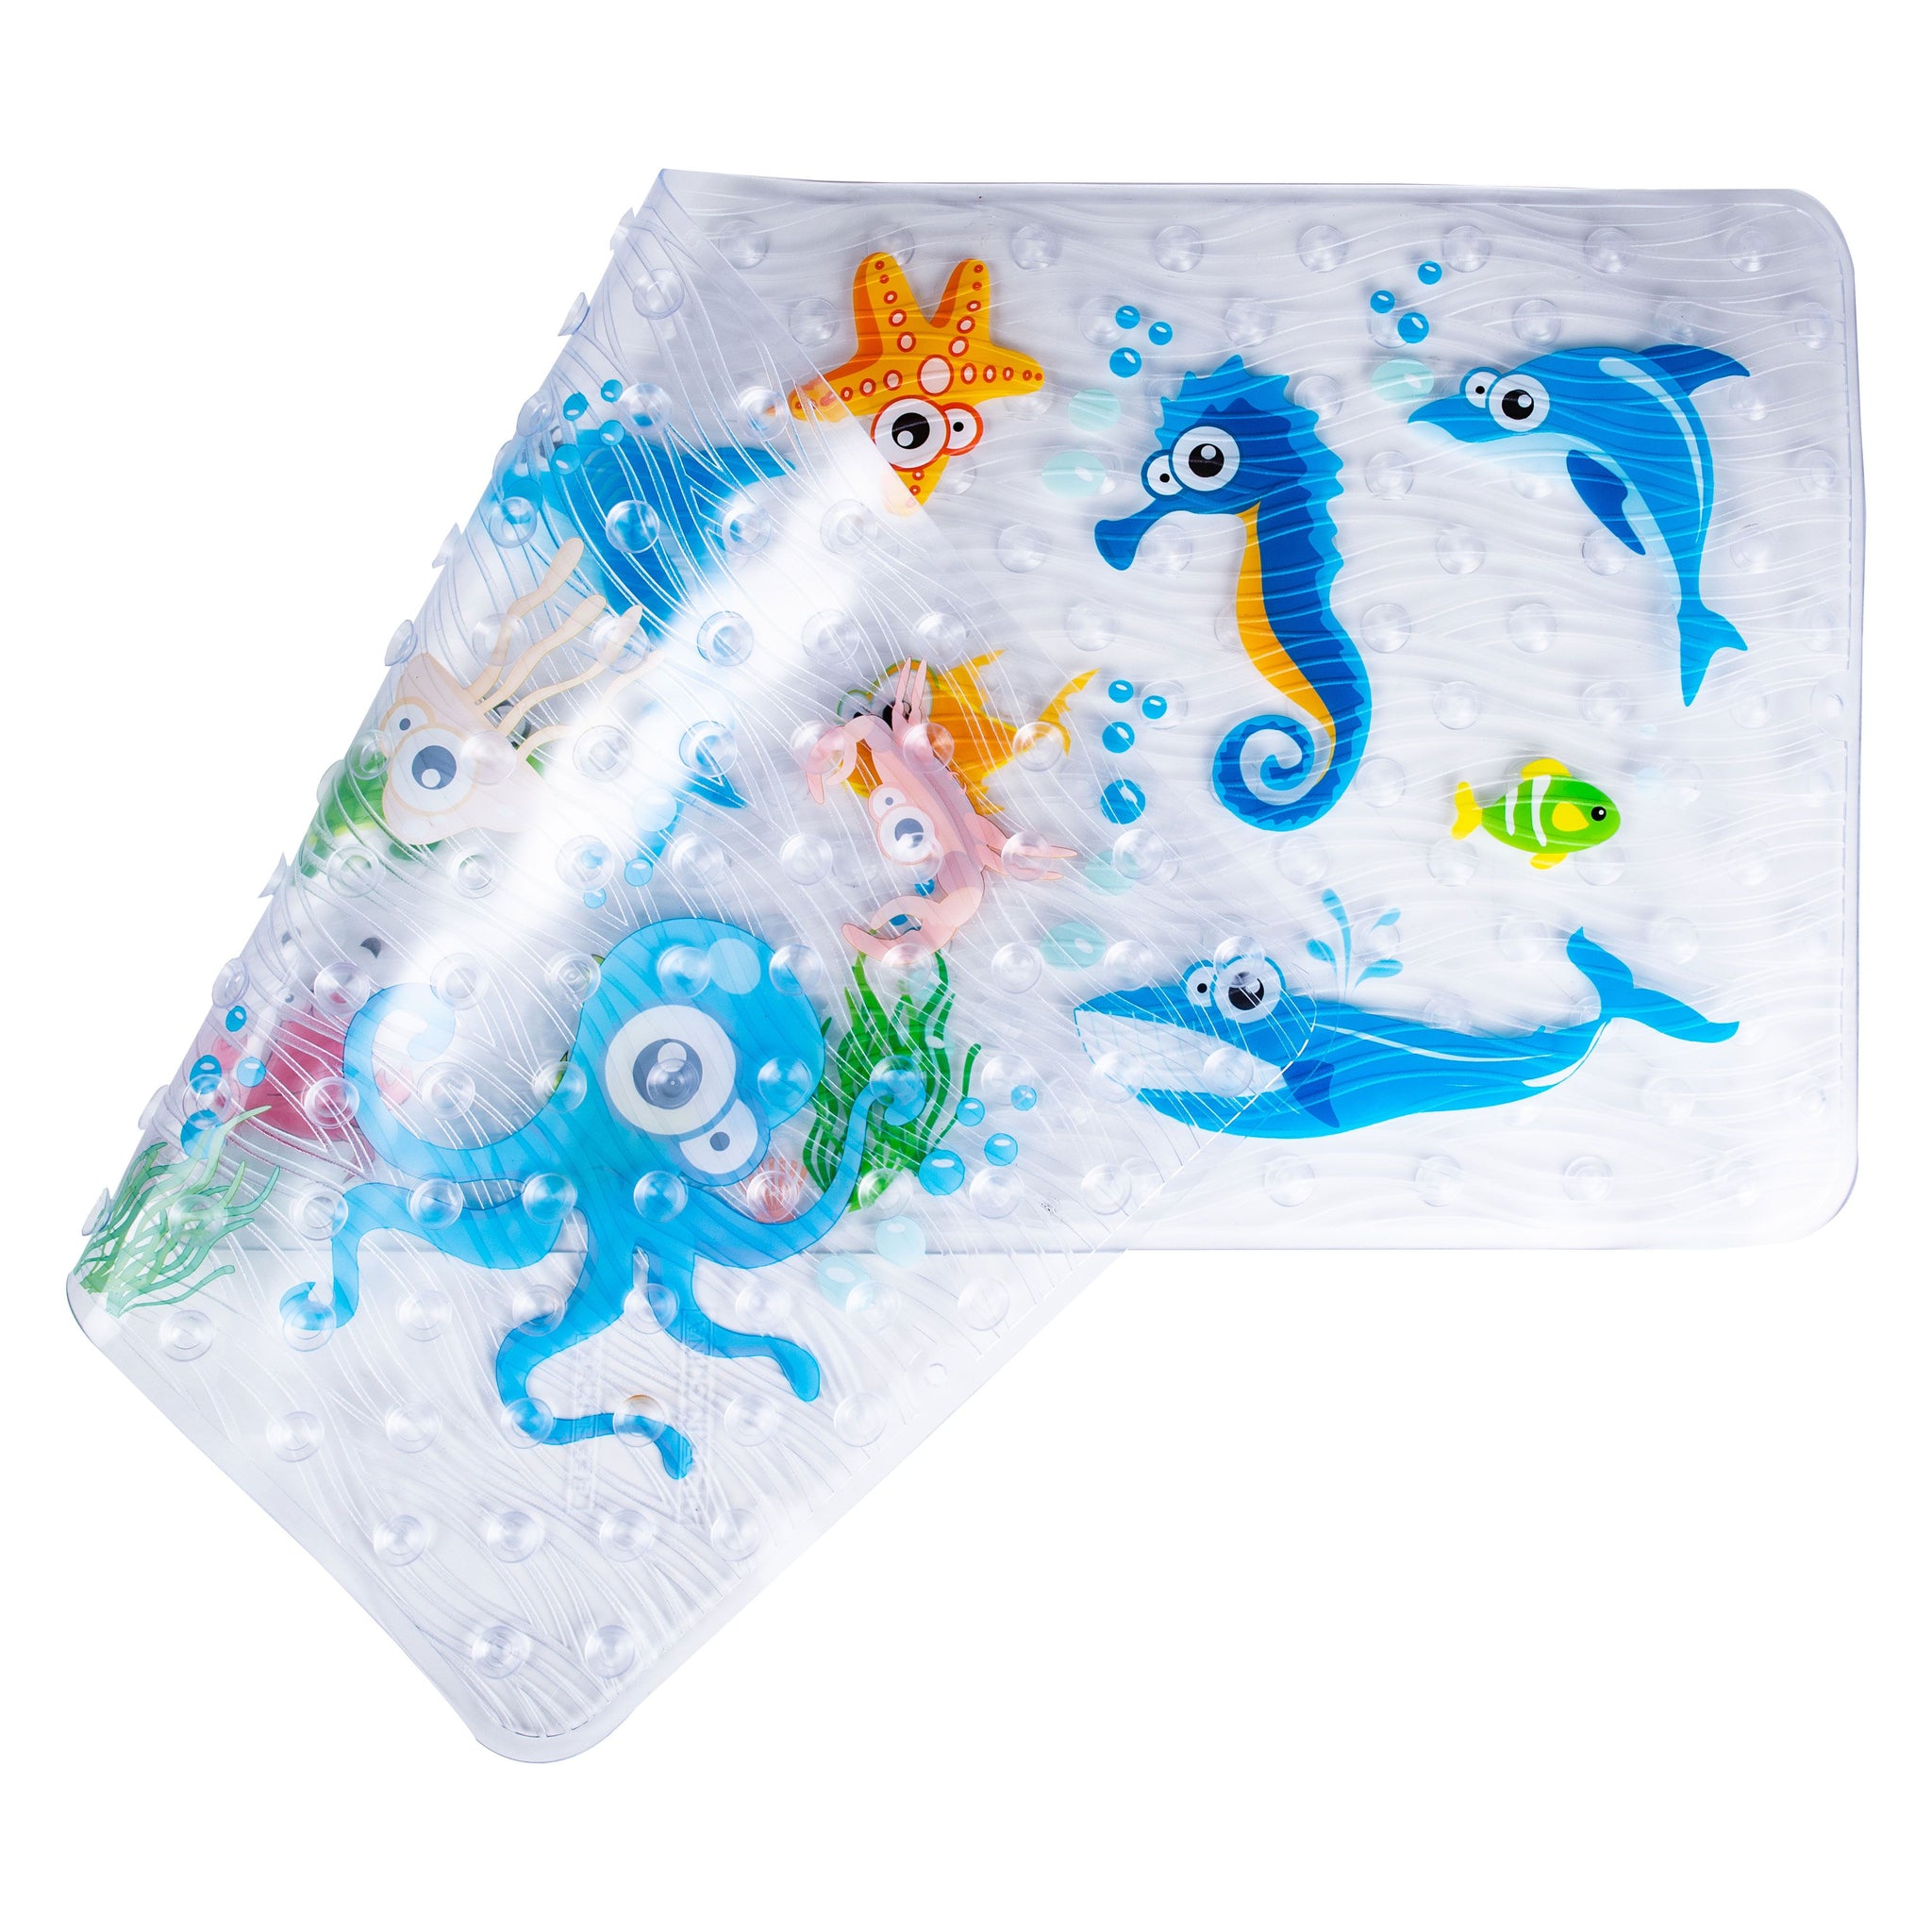 Emmzoe Bubble Rubber Anti-Slip Bath Mat 14 x 30 Inches Kids & Baby